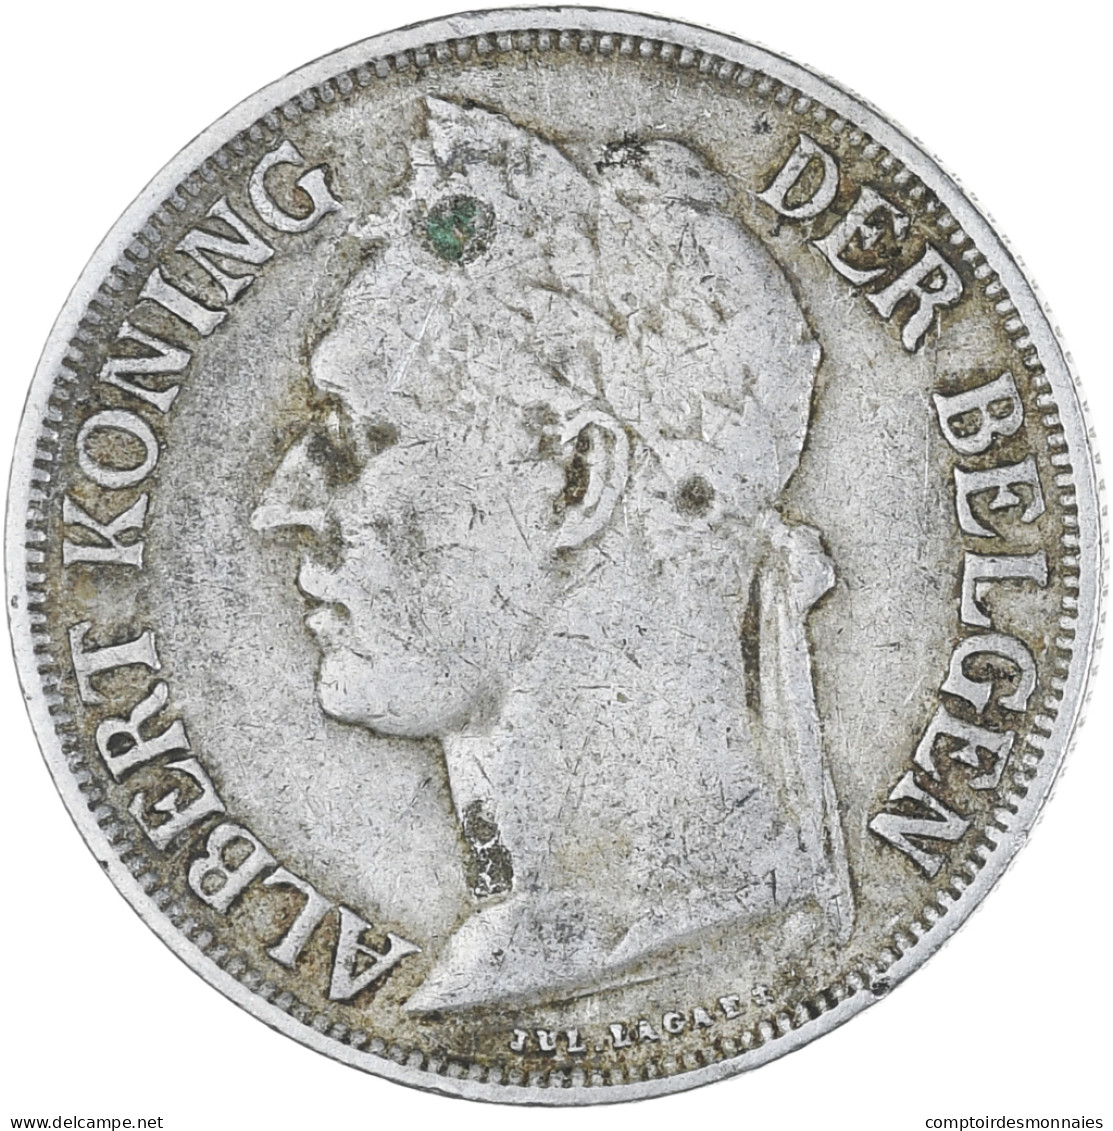 Monnaie, Congo Belge, Franc, 1926, TTB, Cupro-nickel, KM:21 - 1910-1934: Albert I.